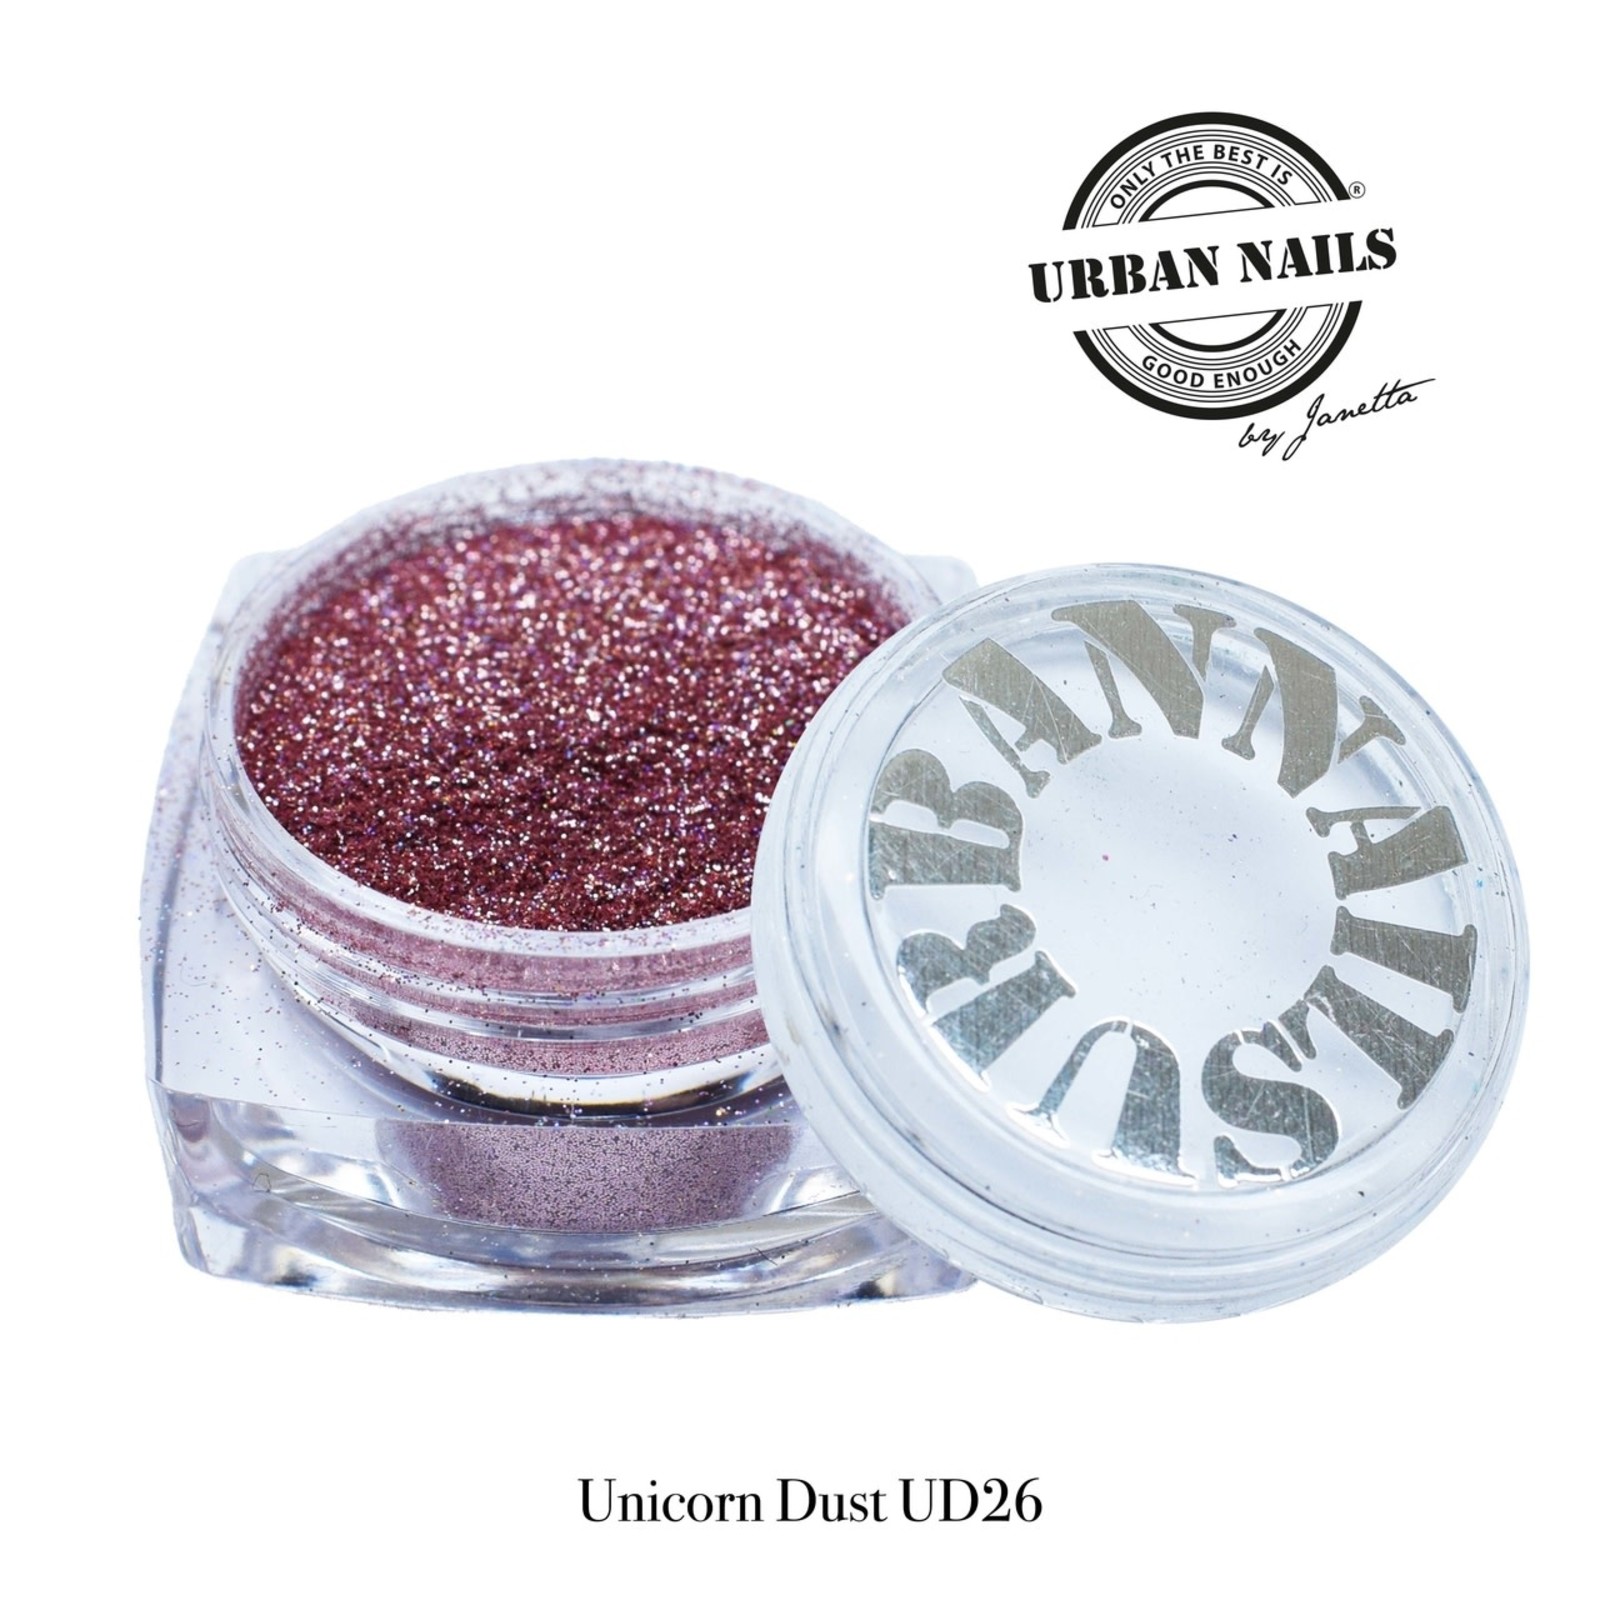 Urban nails Unicorn Dust UD26